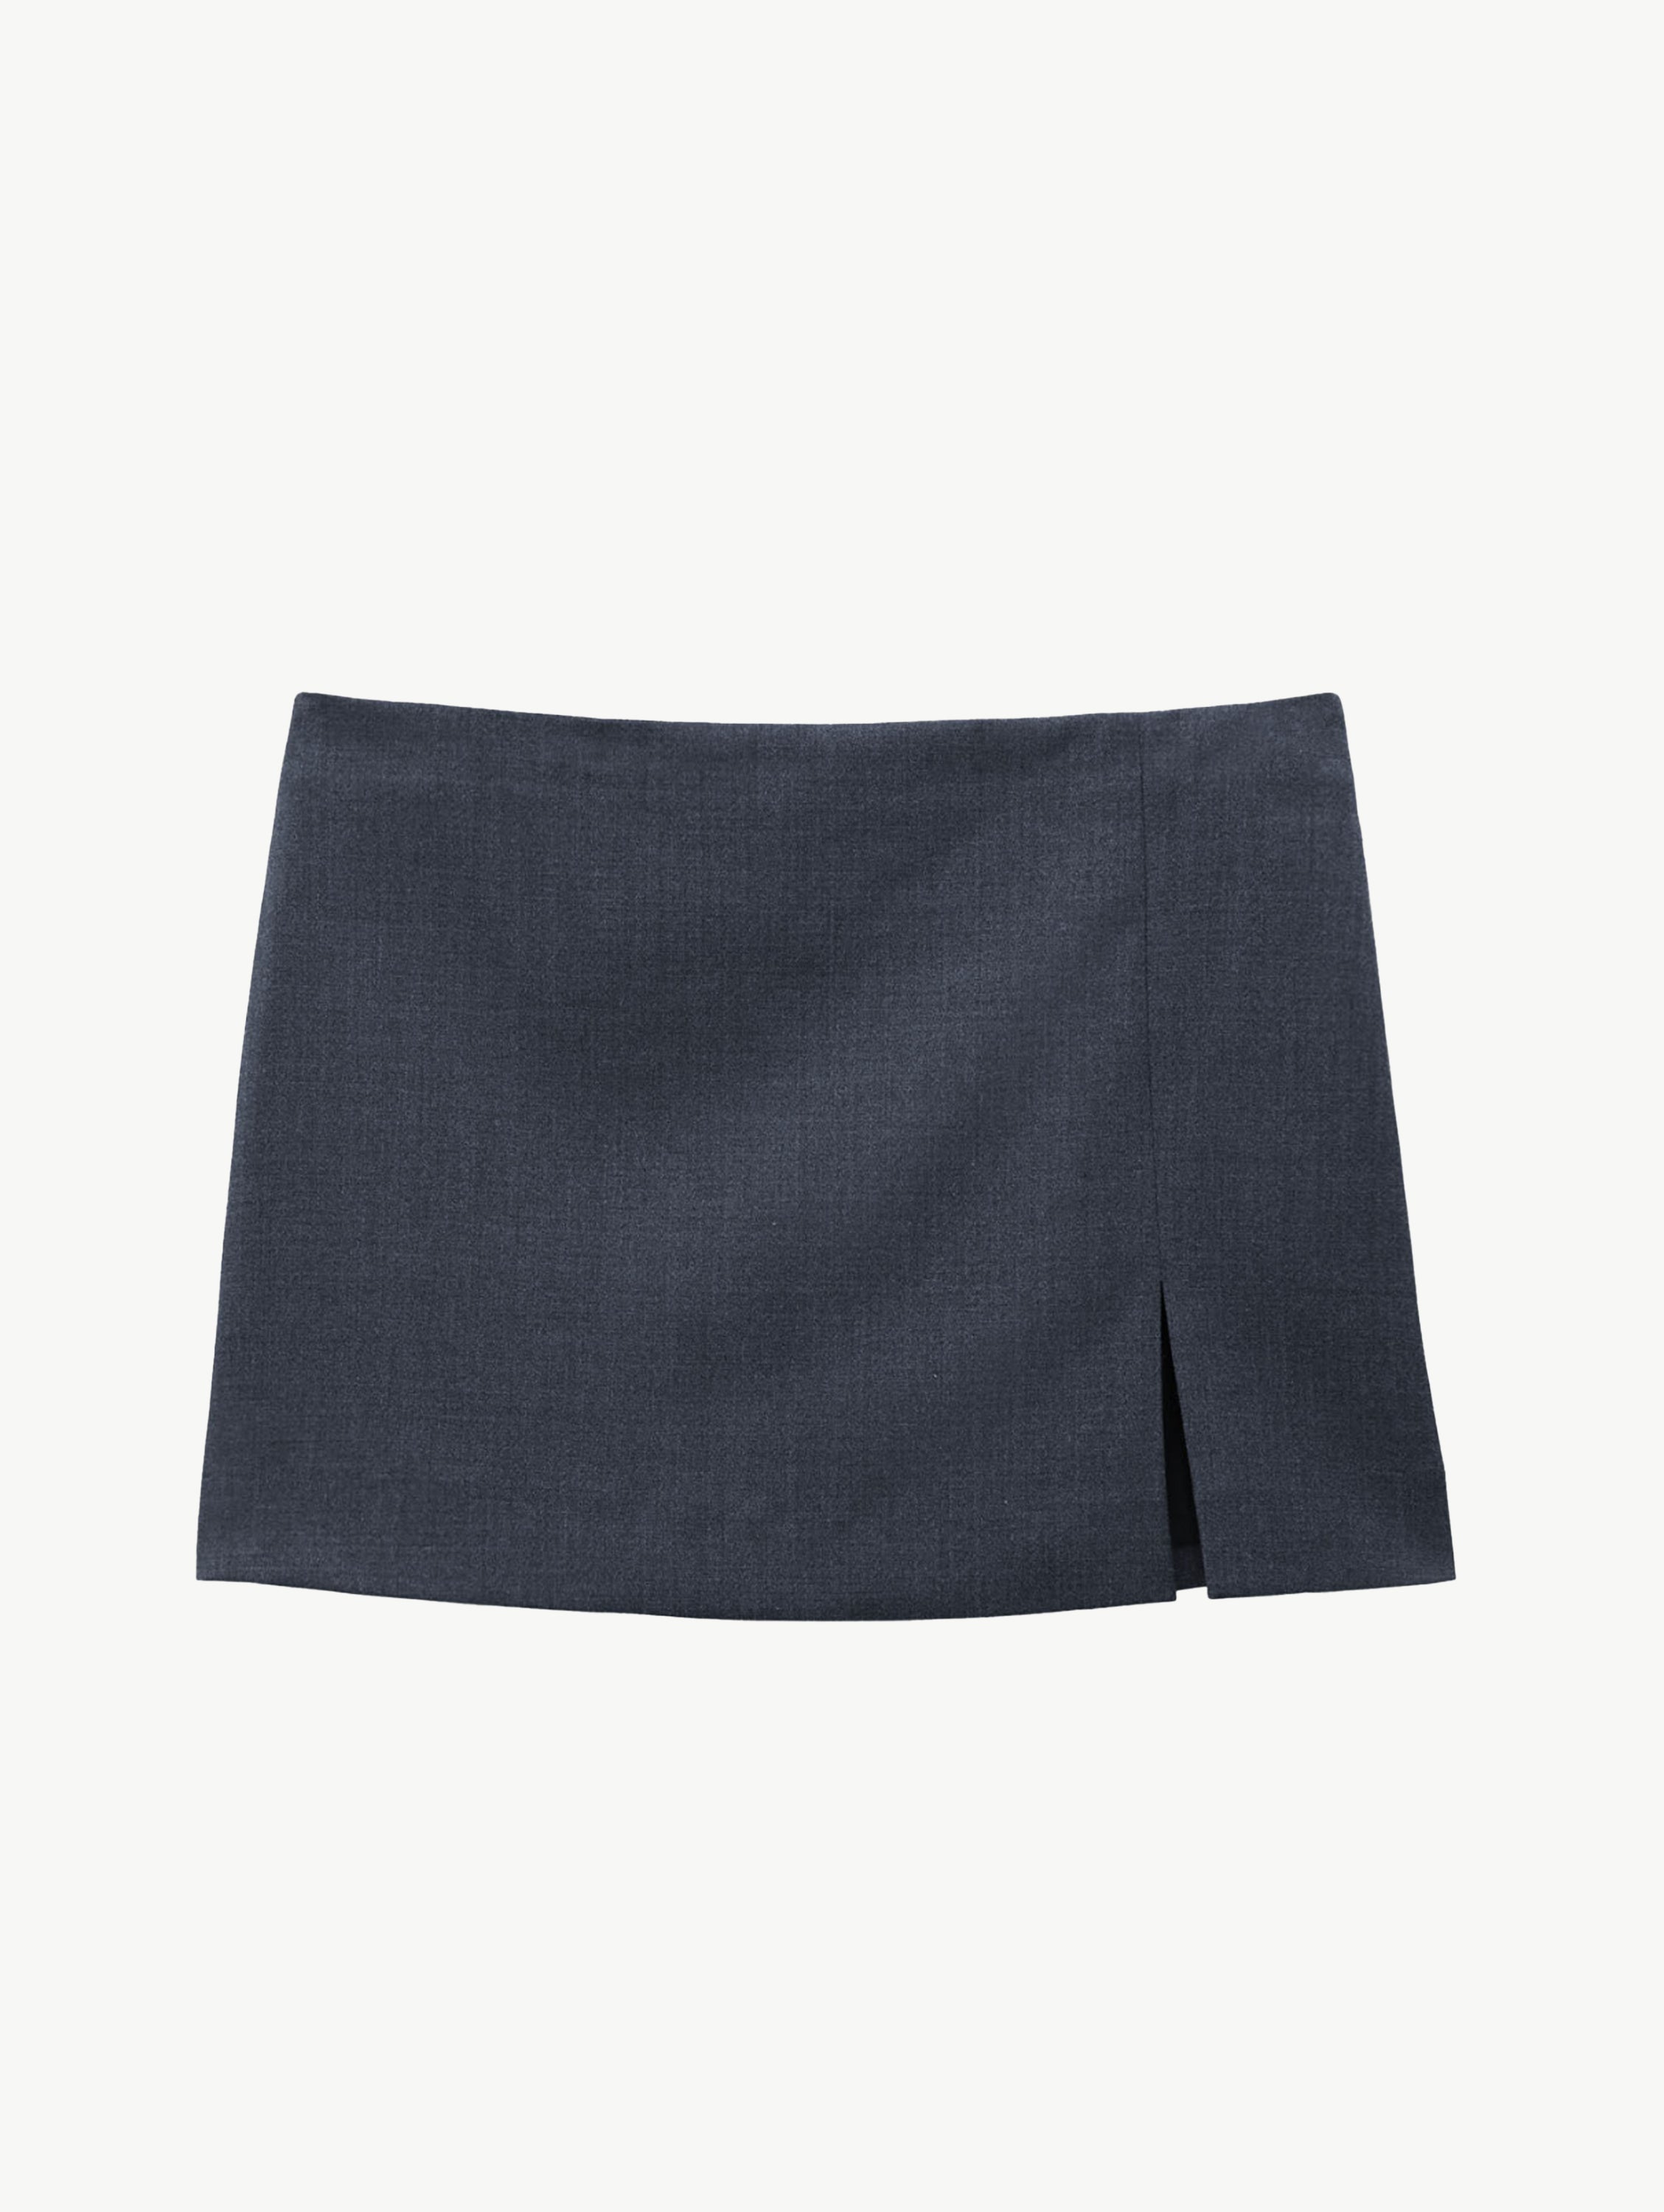 Dark grey mini skirt